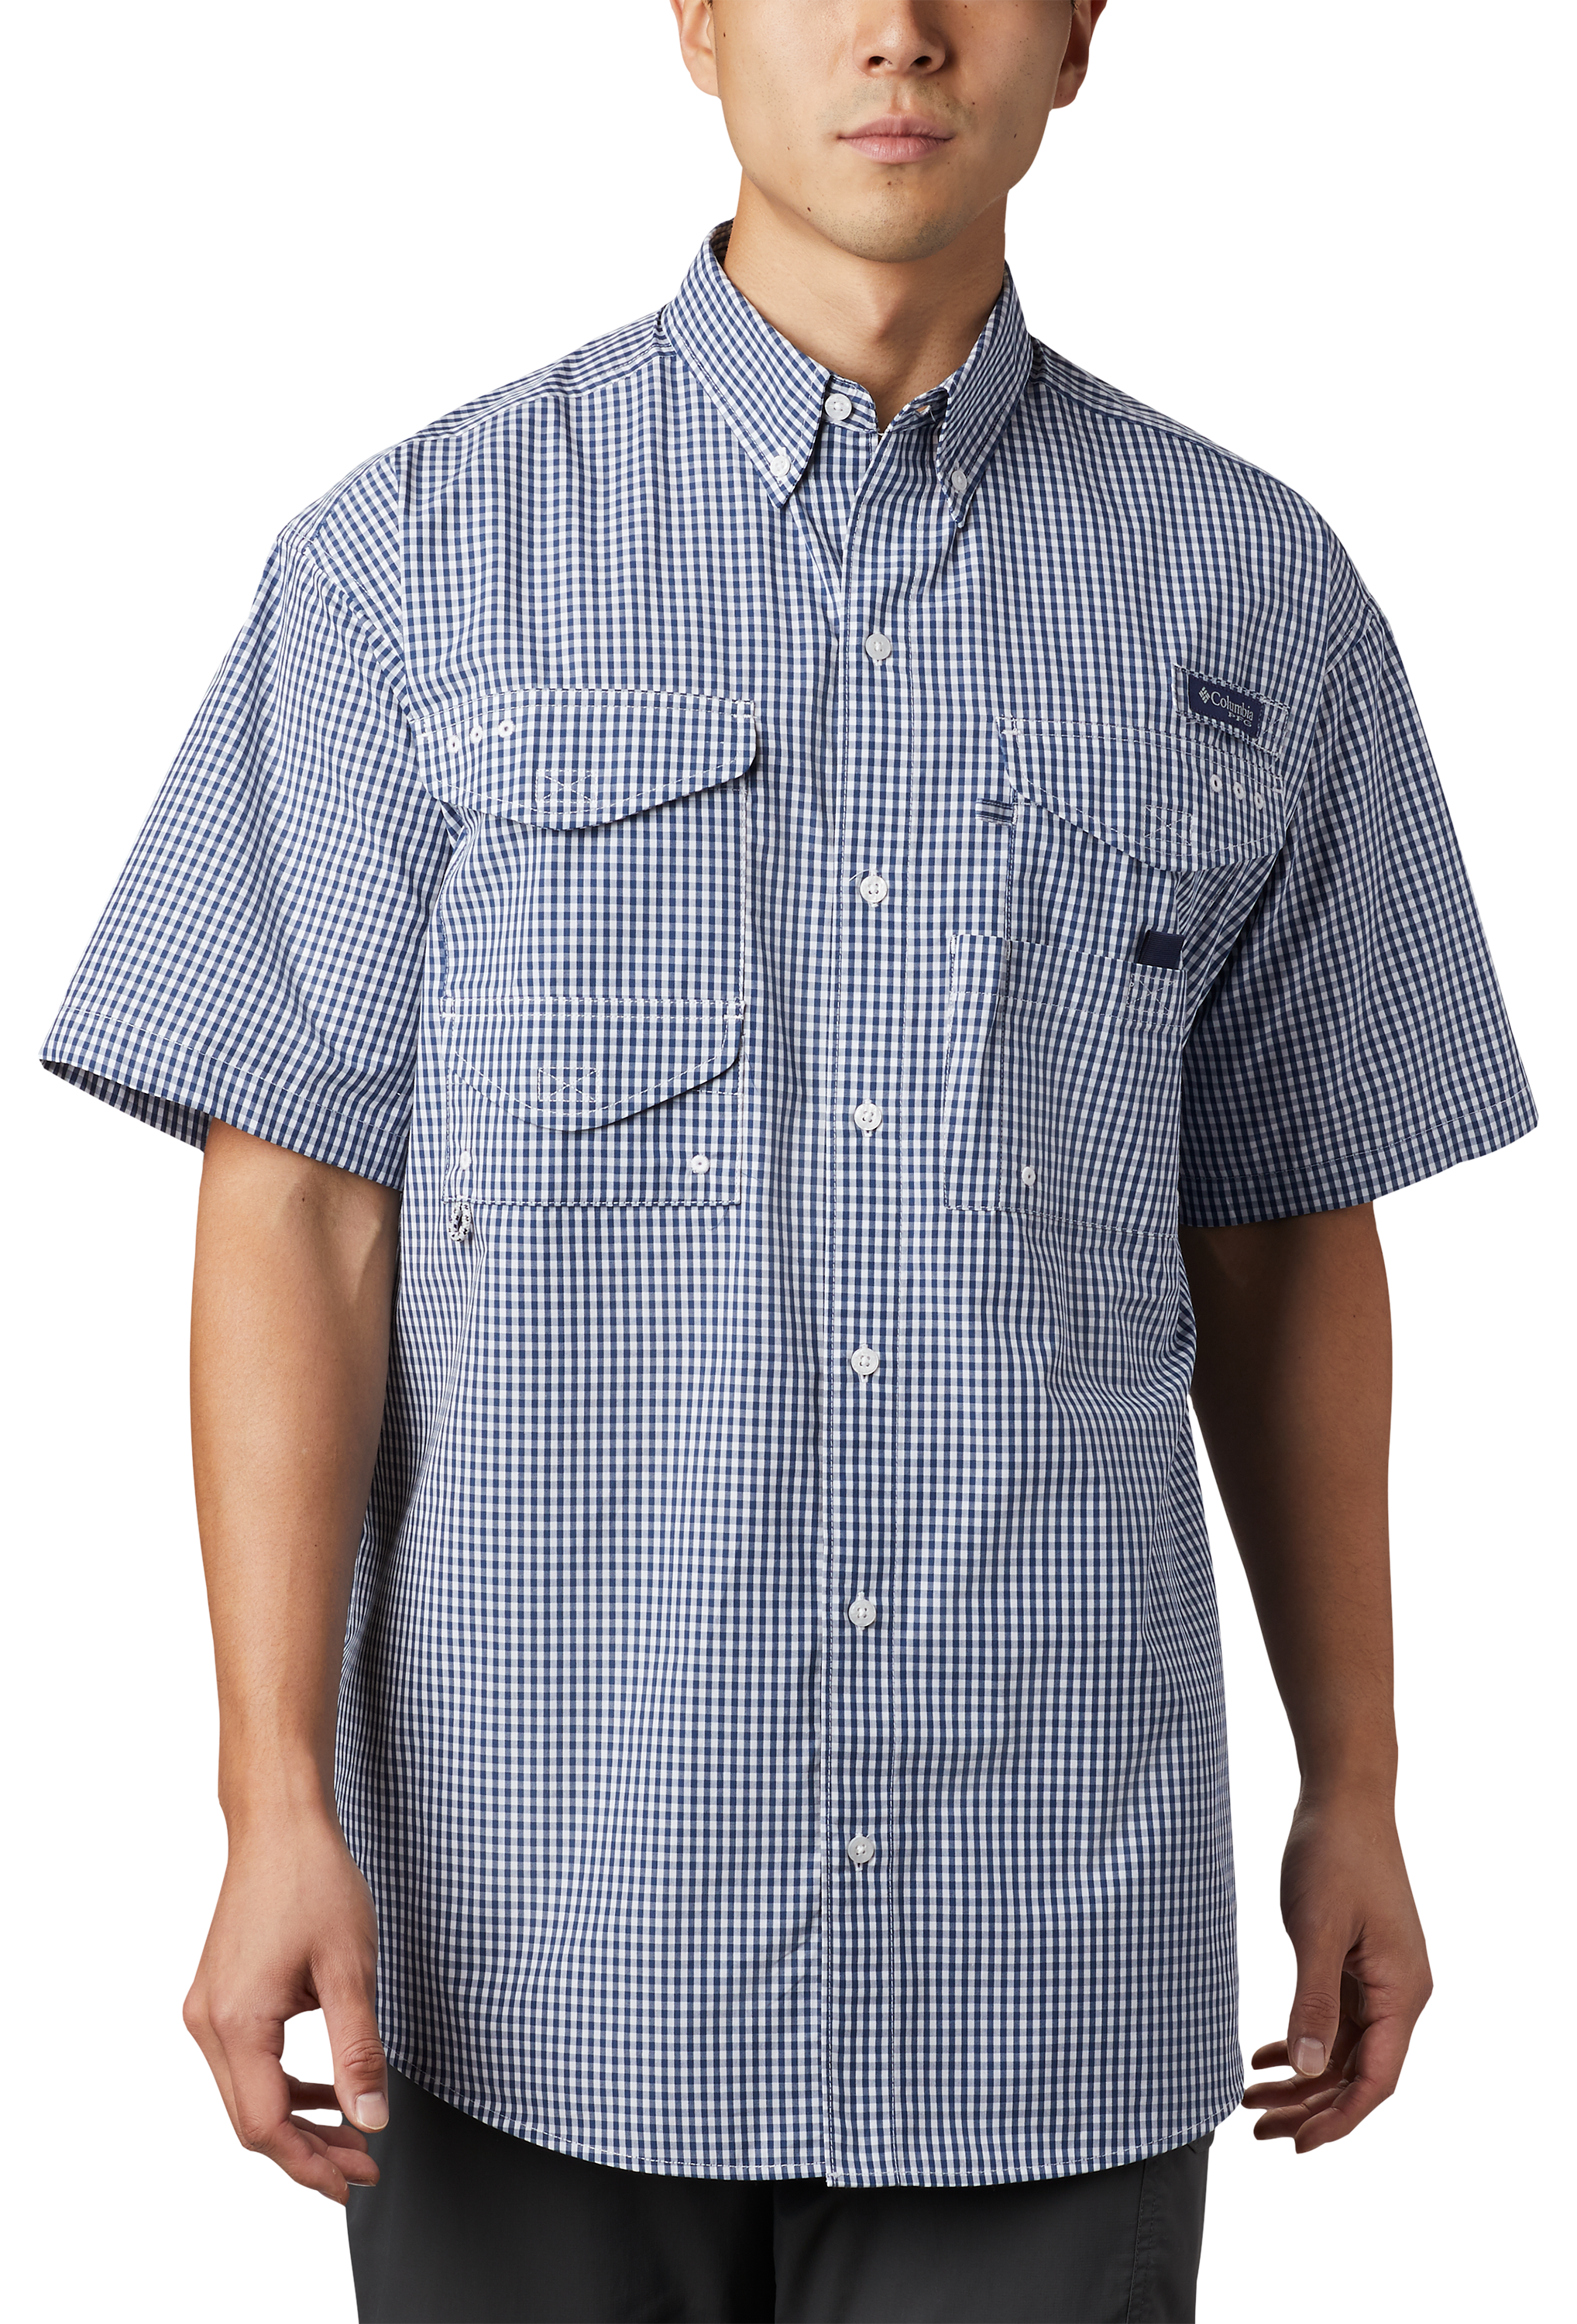 Columbia Super Bonehead Classic PFG Short-Sleeve Shirt for Men